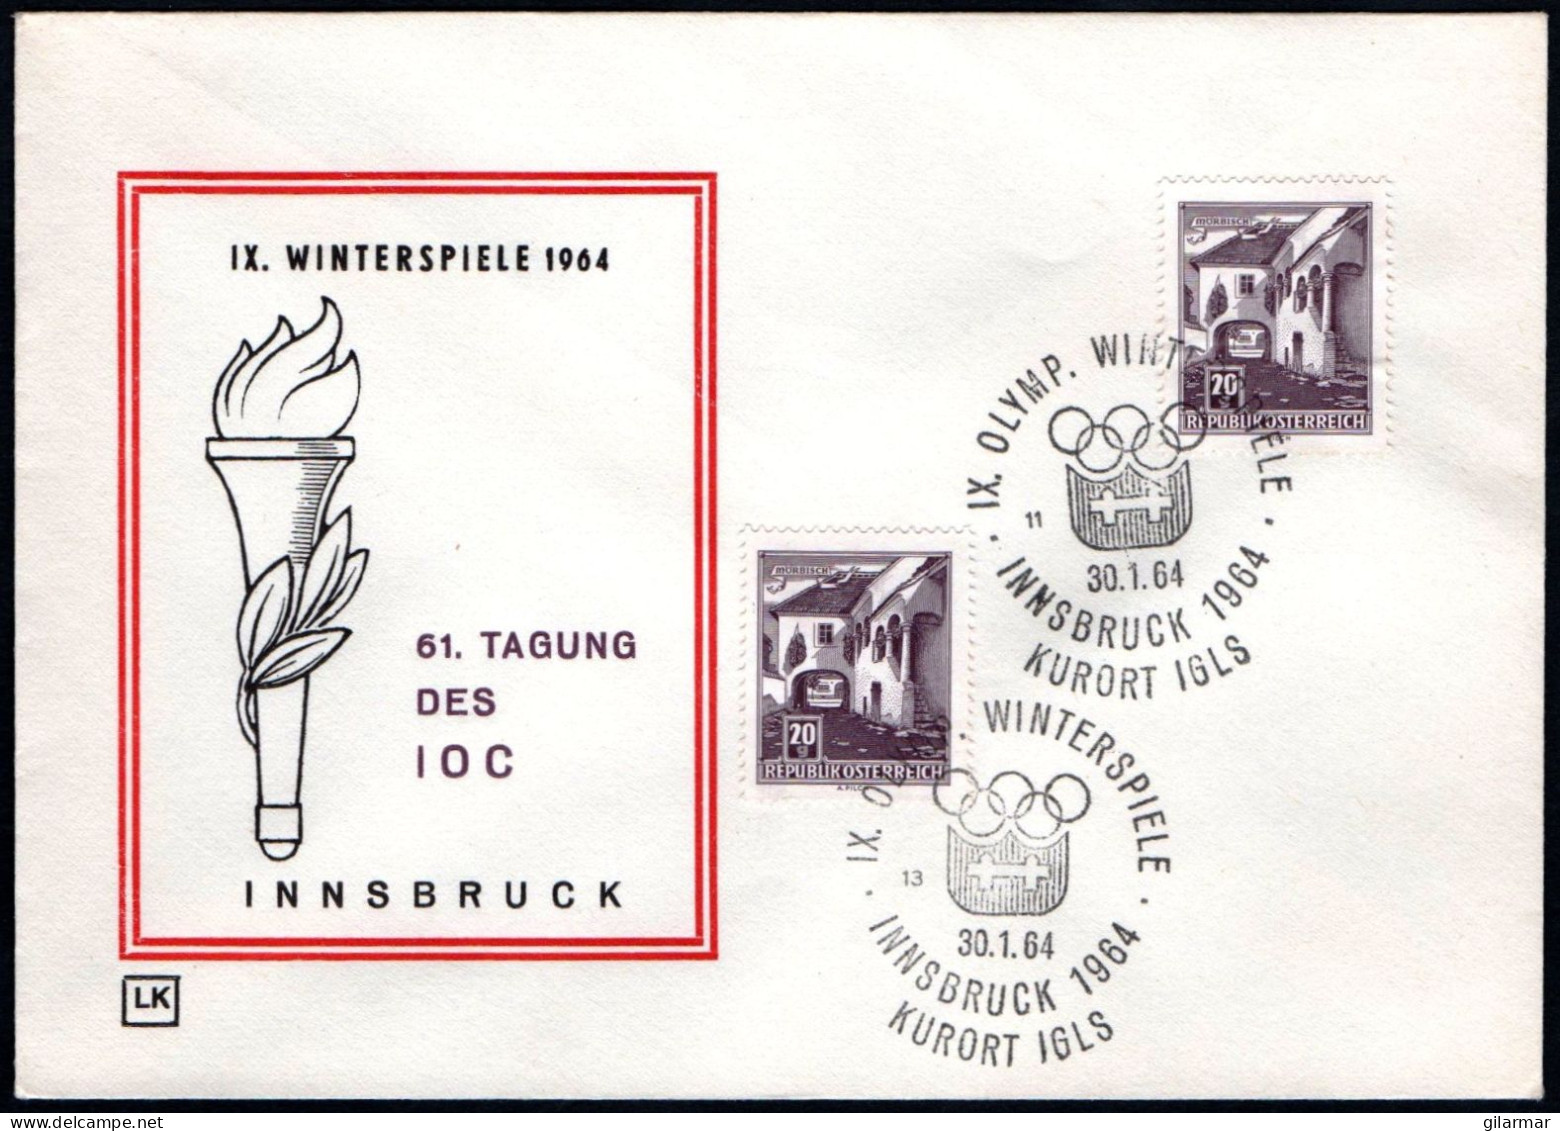 AUSTRIA KURORT IGLS 1964 - IX OLYMPIC WINTER GAMES - INNSBRUCK '64 - CANCELS # 13 & 11 - G - Invierno 1964: Innsbruck